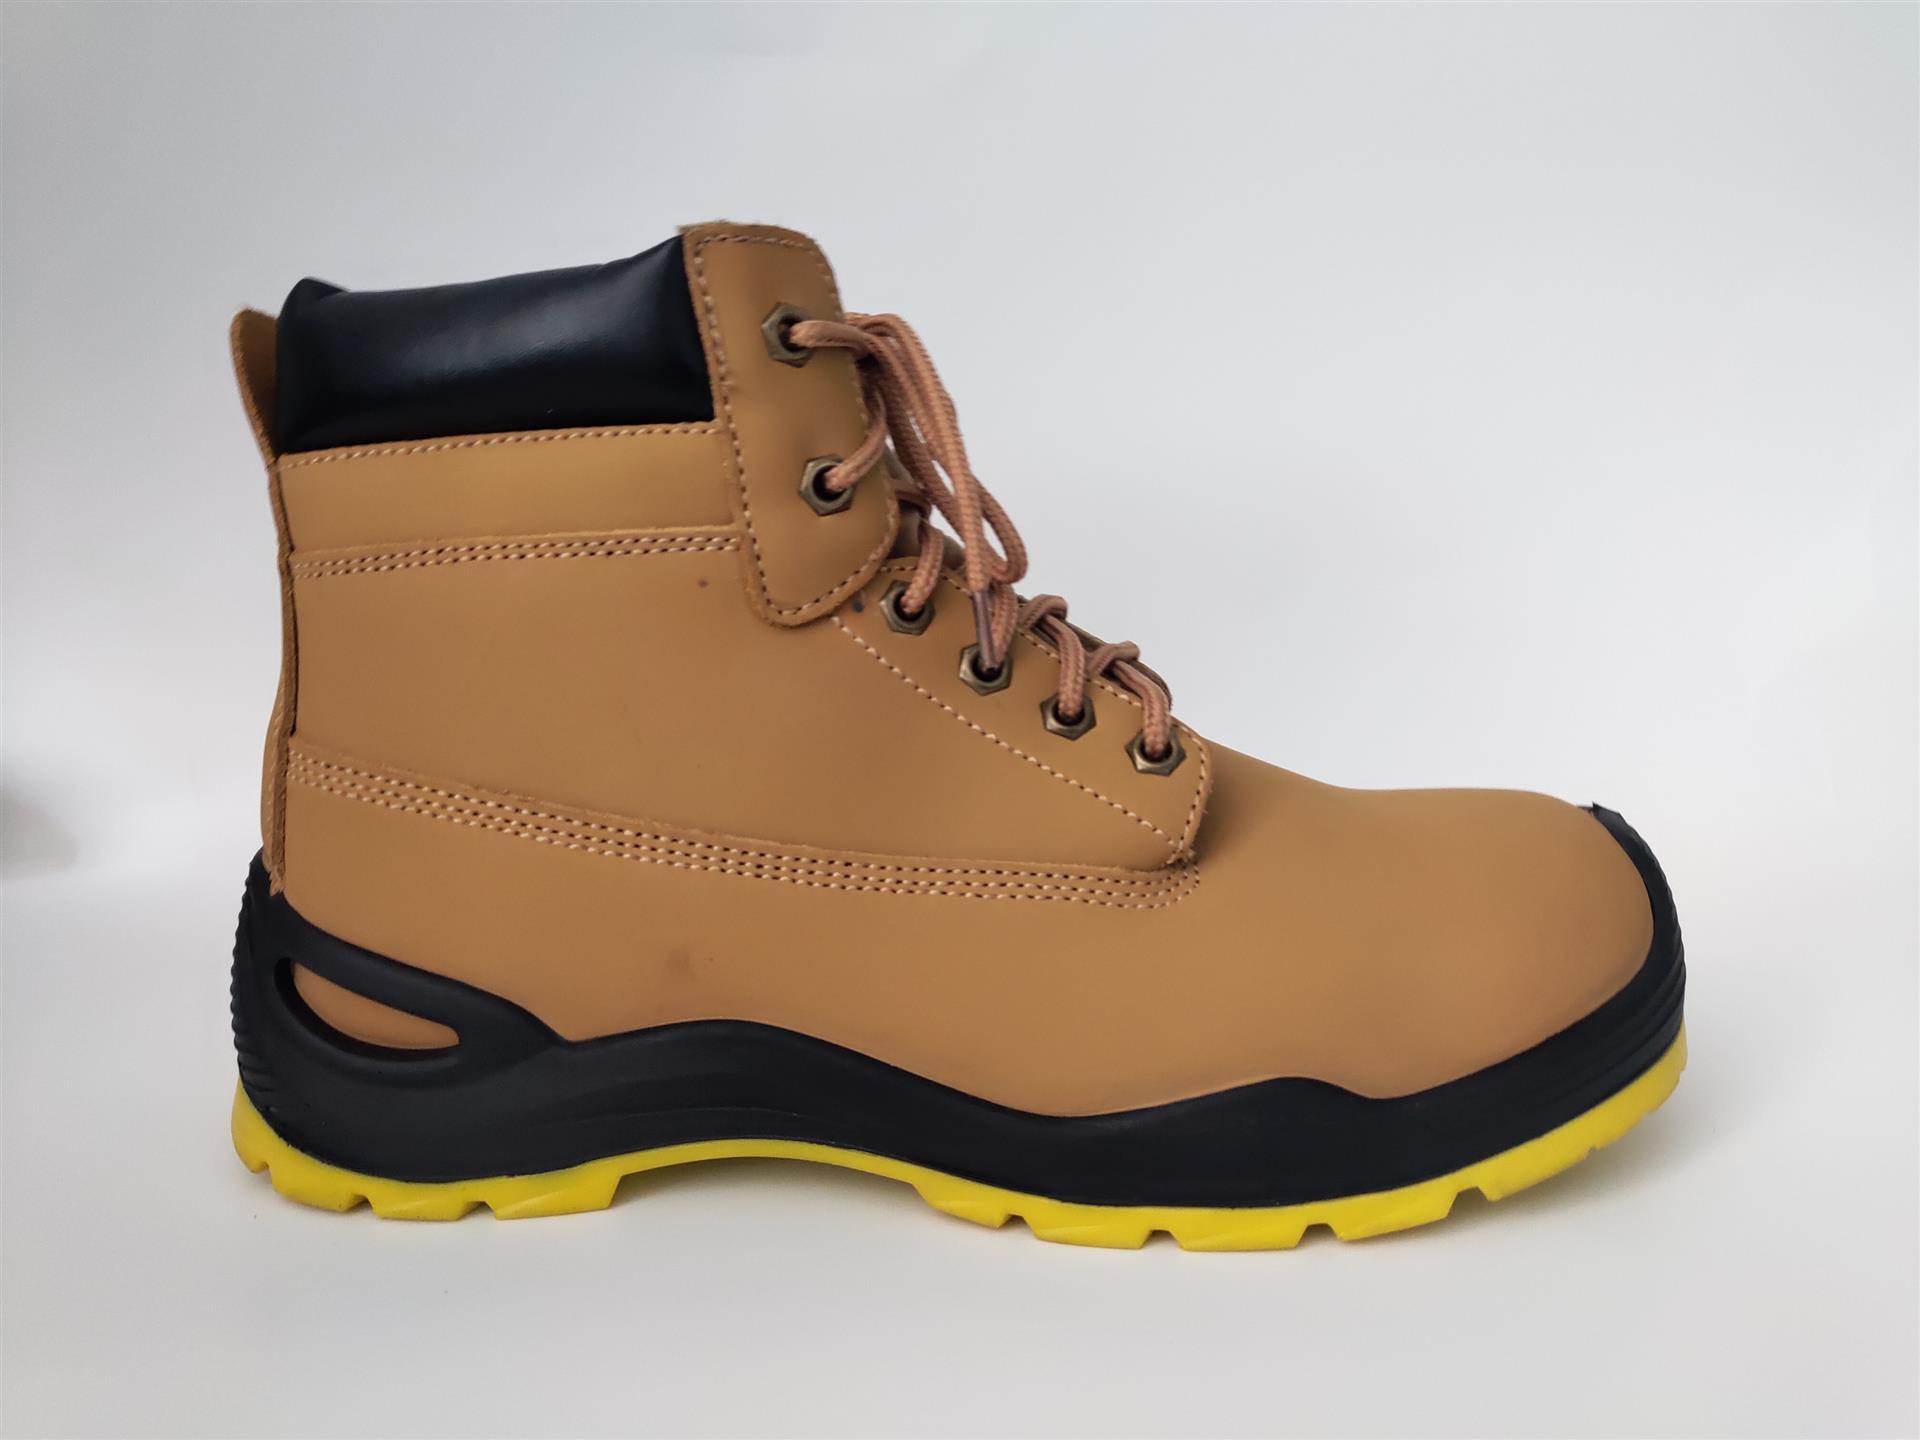 kingorder|china safety shoes manufacturer,safety boots supplier 